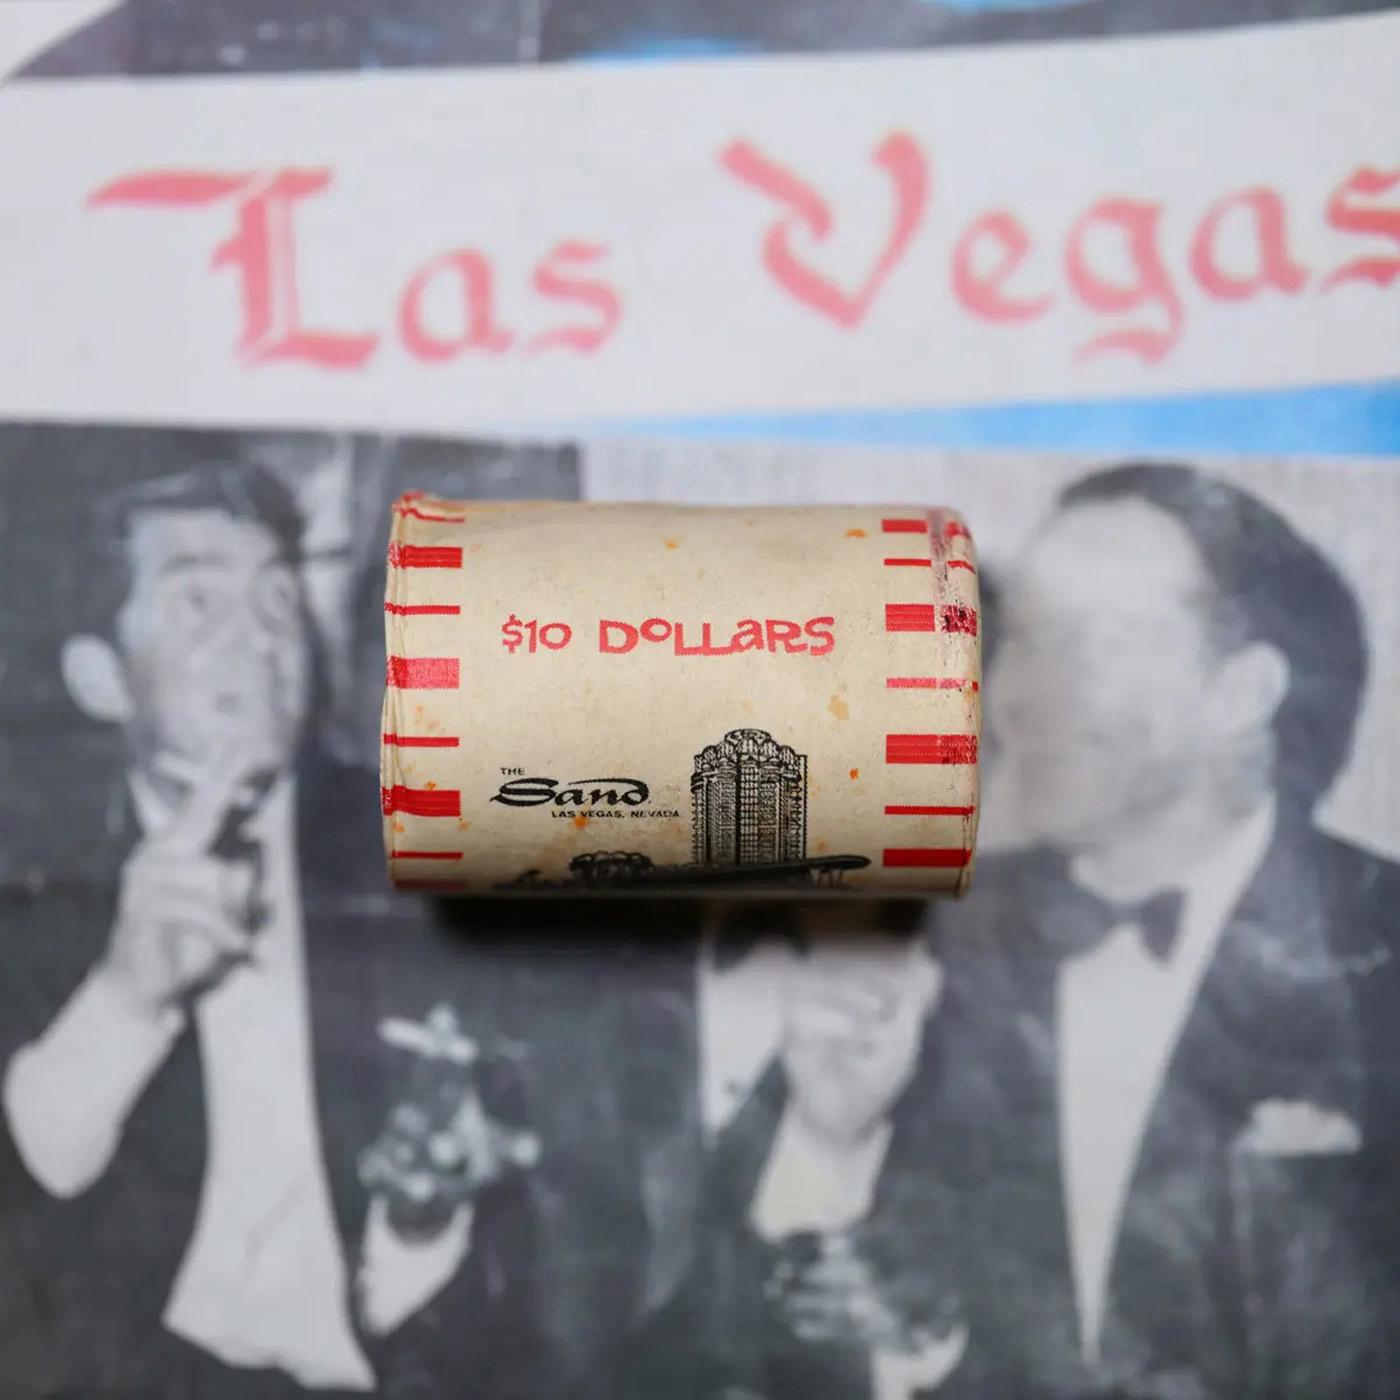 ***Auction Highlight*** Old Casino 50c Roll $10 Halves Las Vegas Casino Sands 1936 walker & D frankl